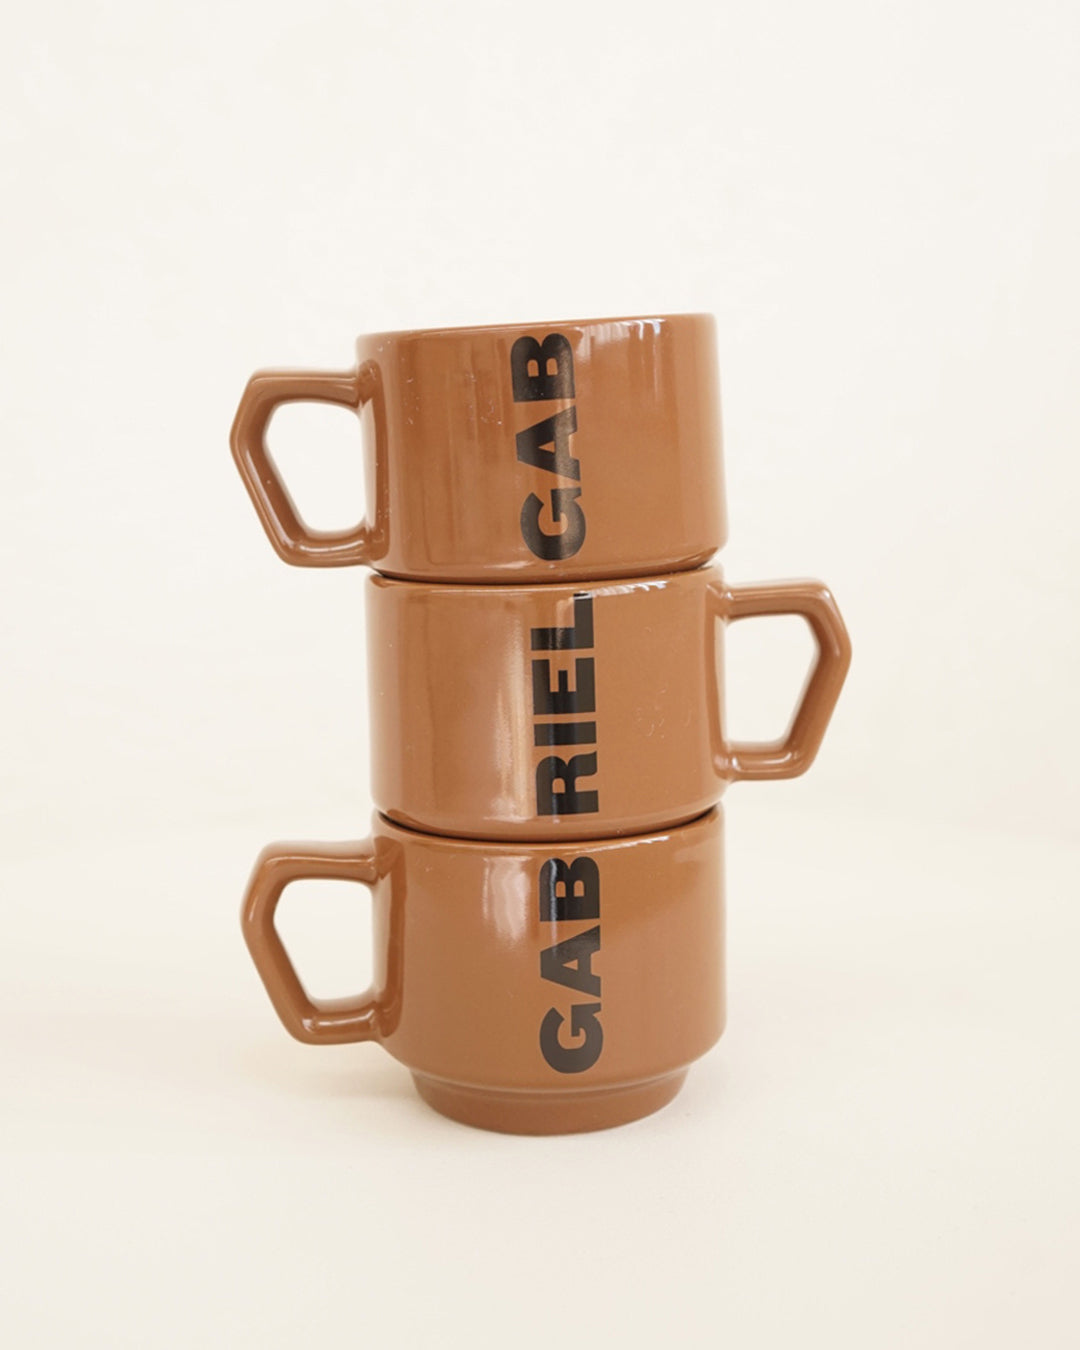 Small Cappuccino Cup (200ml) – Gabriel Coffee